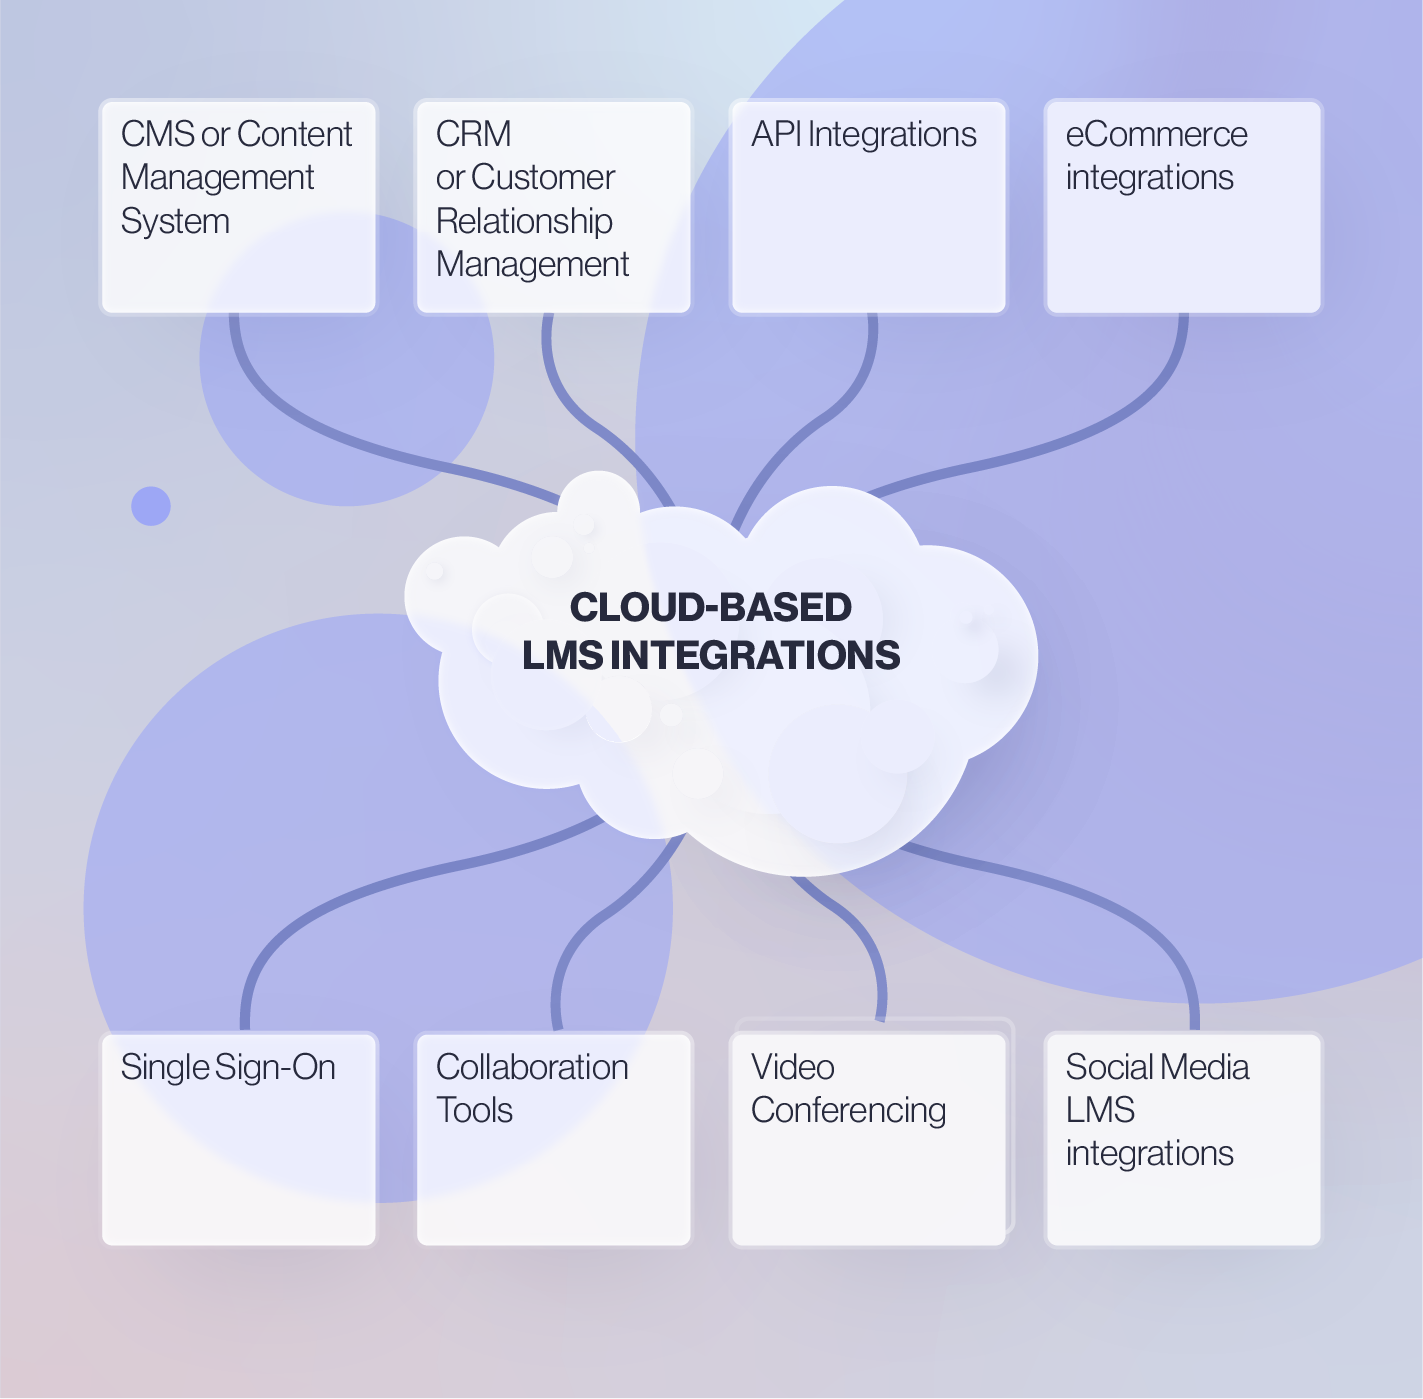 Cloud-based LMS integrations